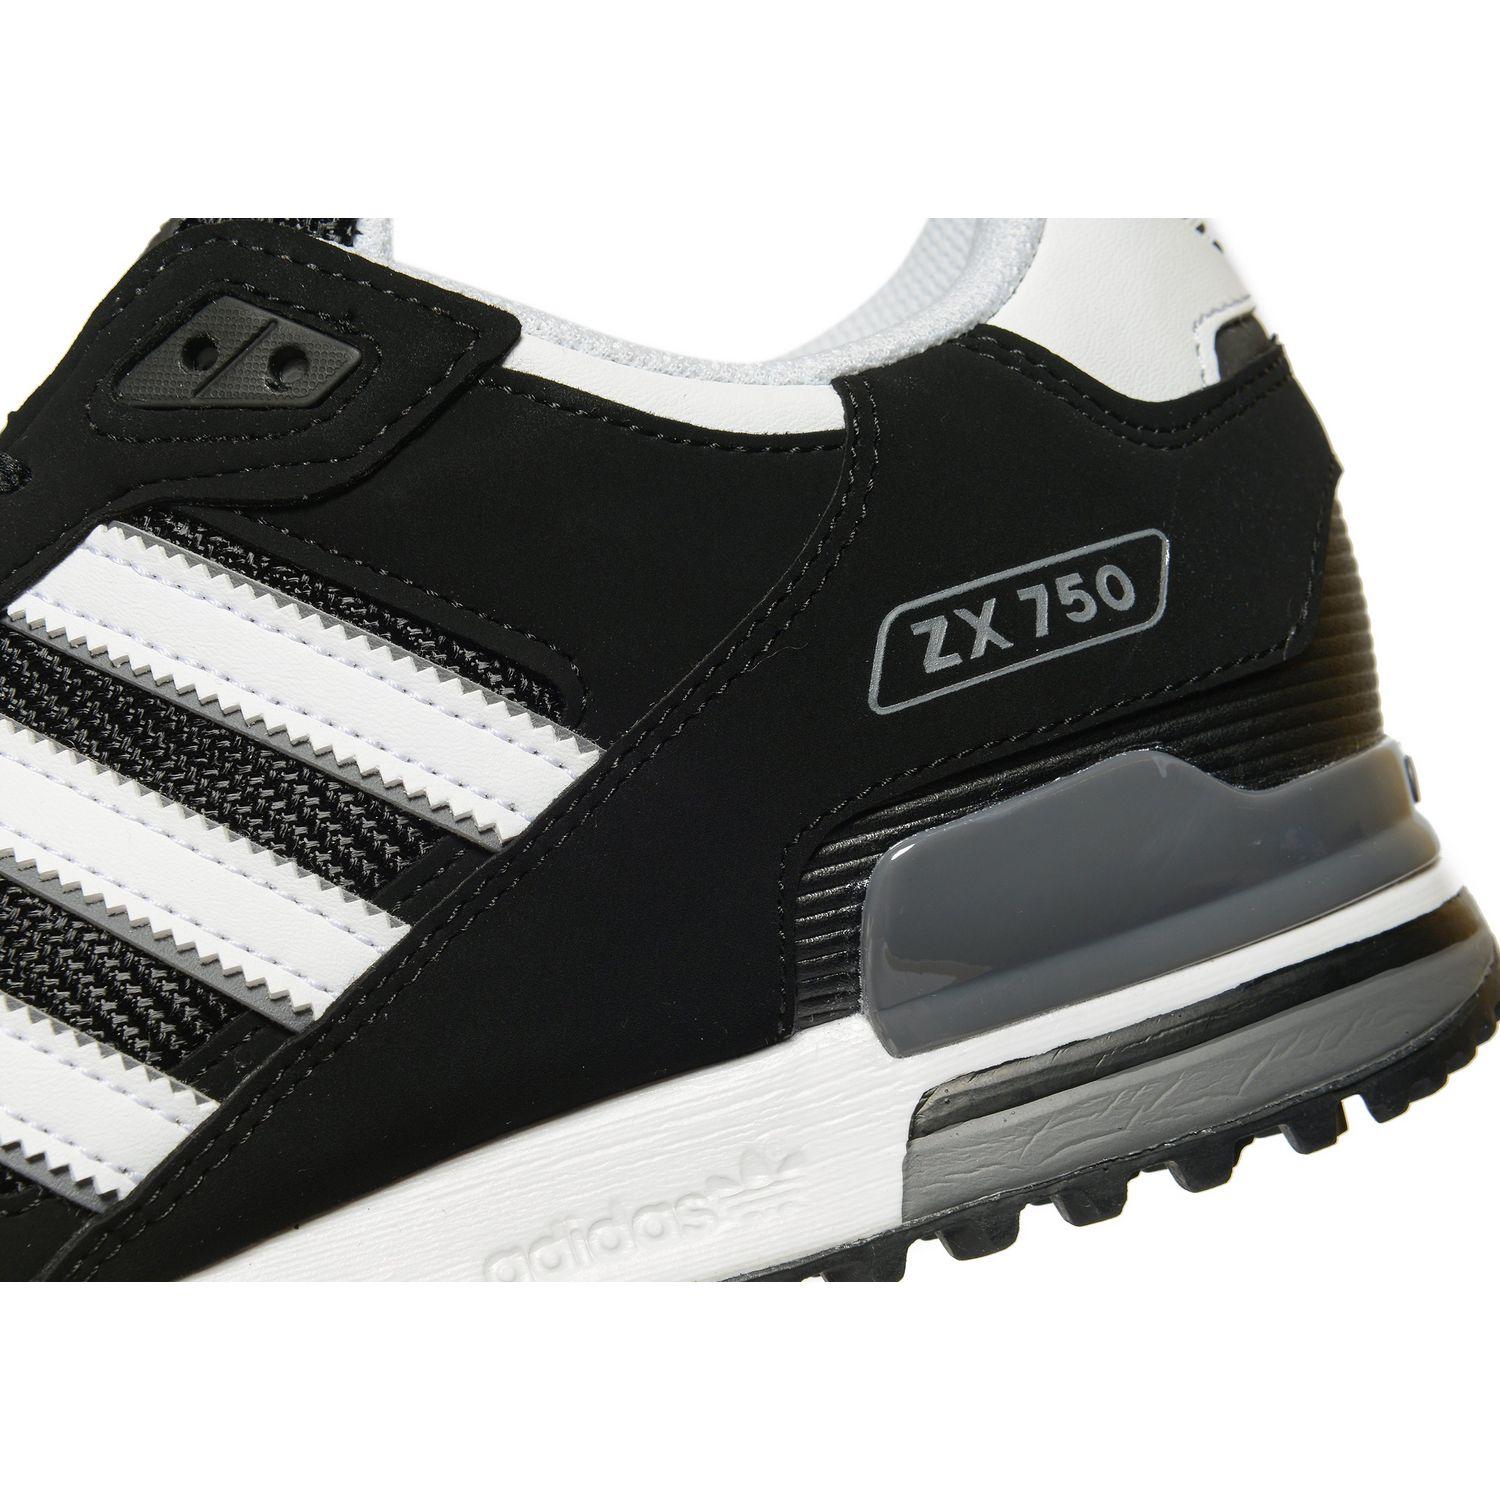 adidas originals mens zx 750 trainers black